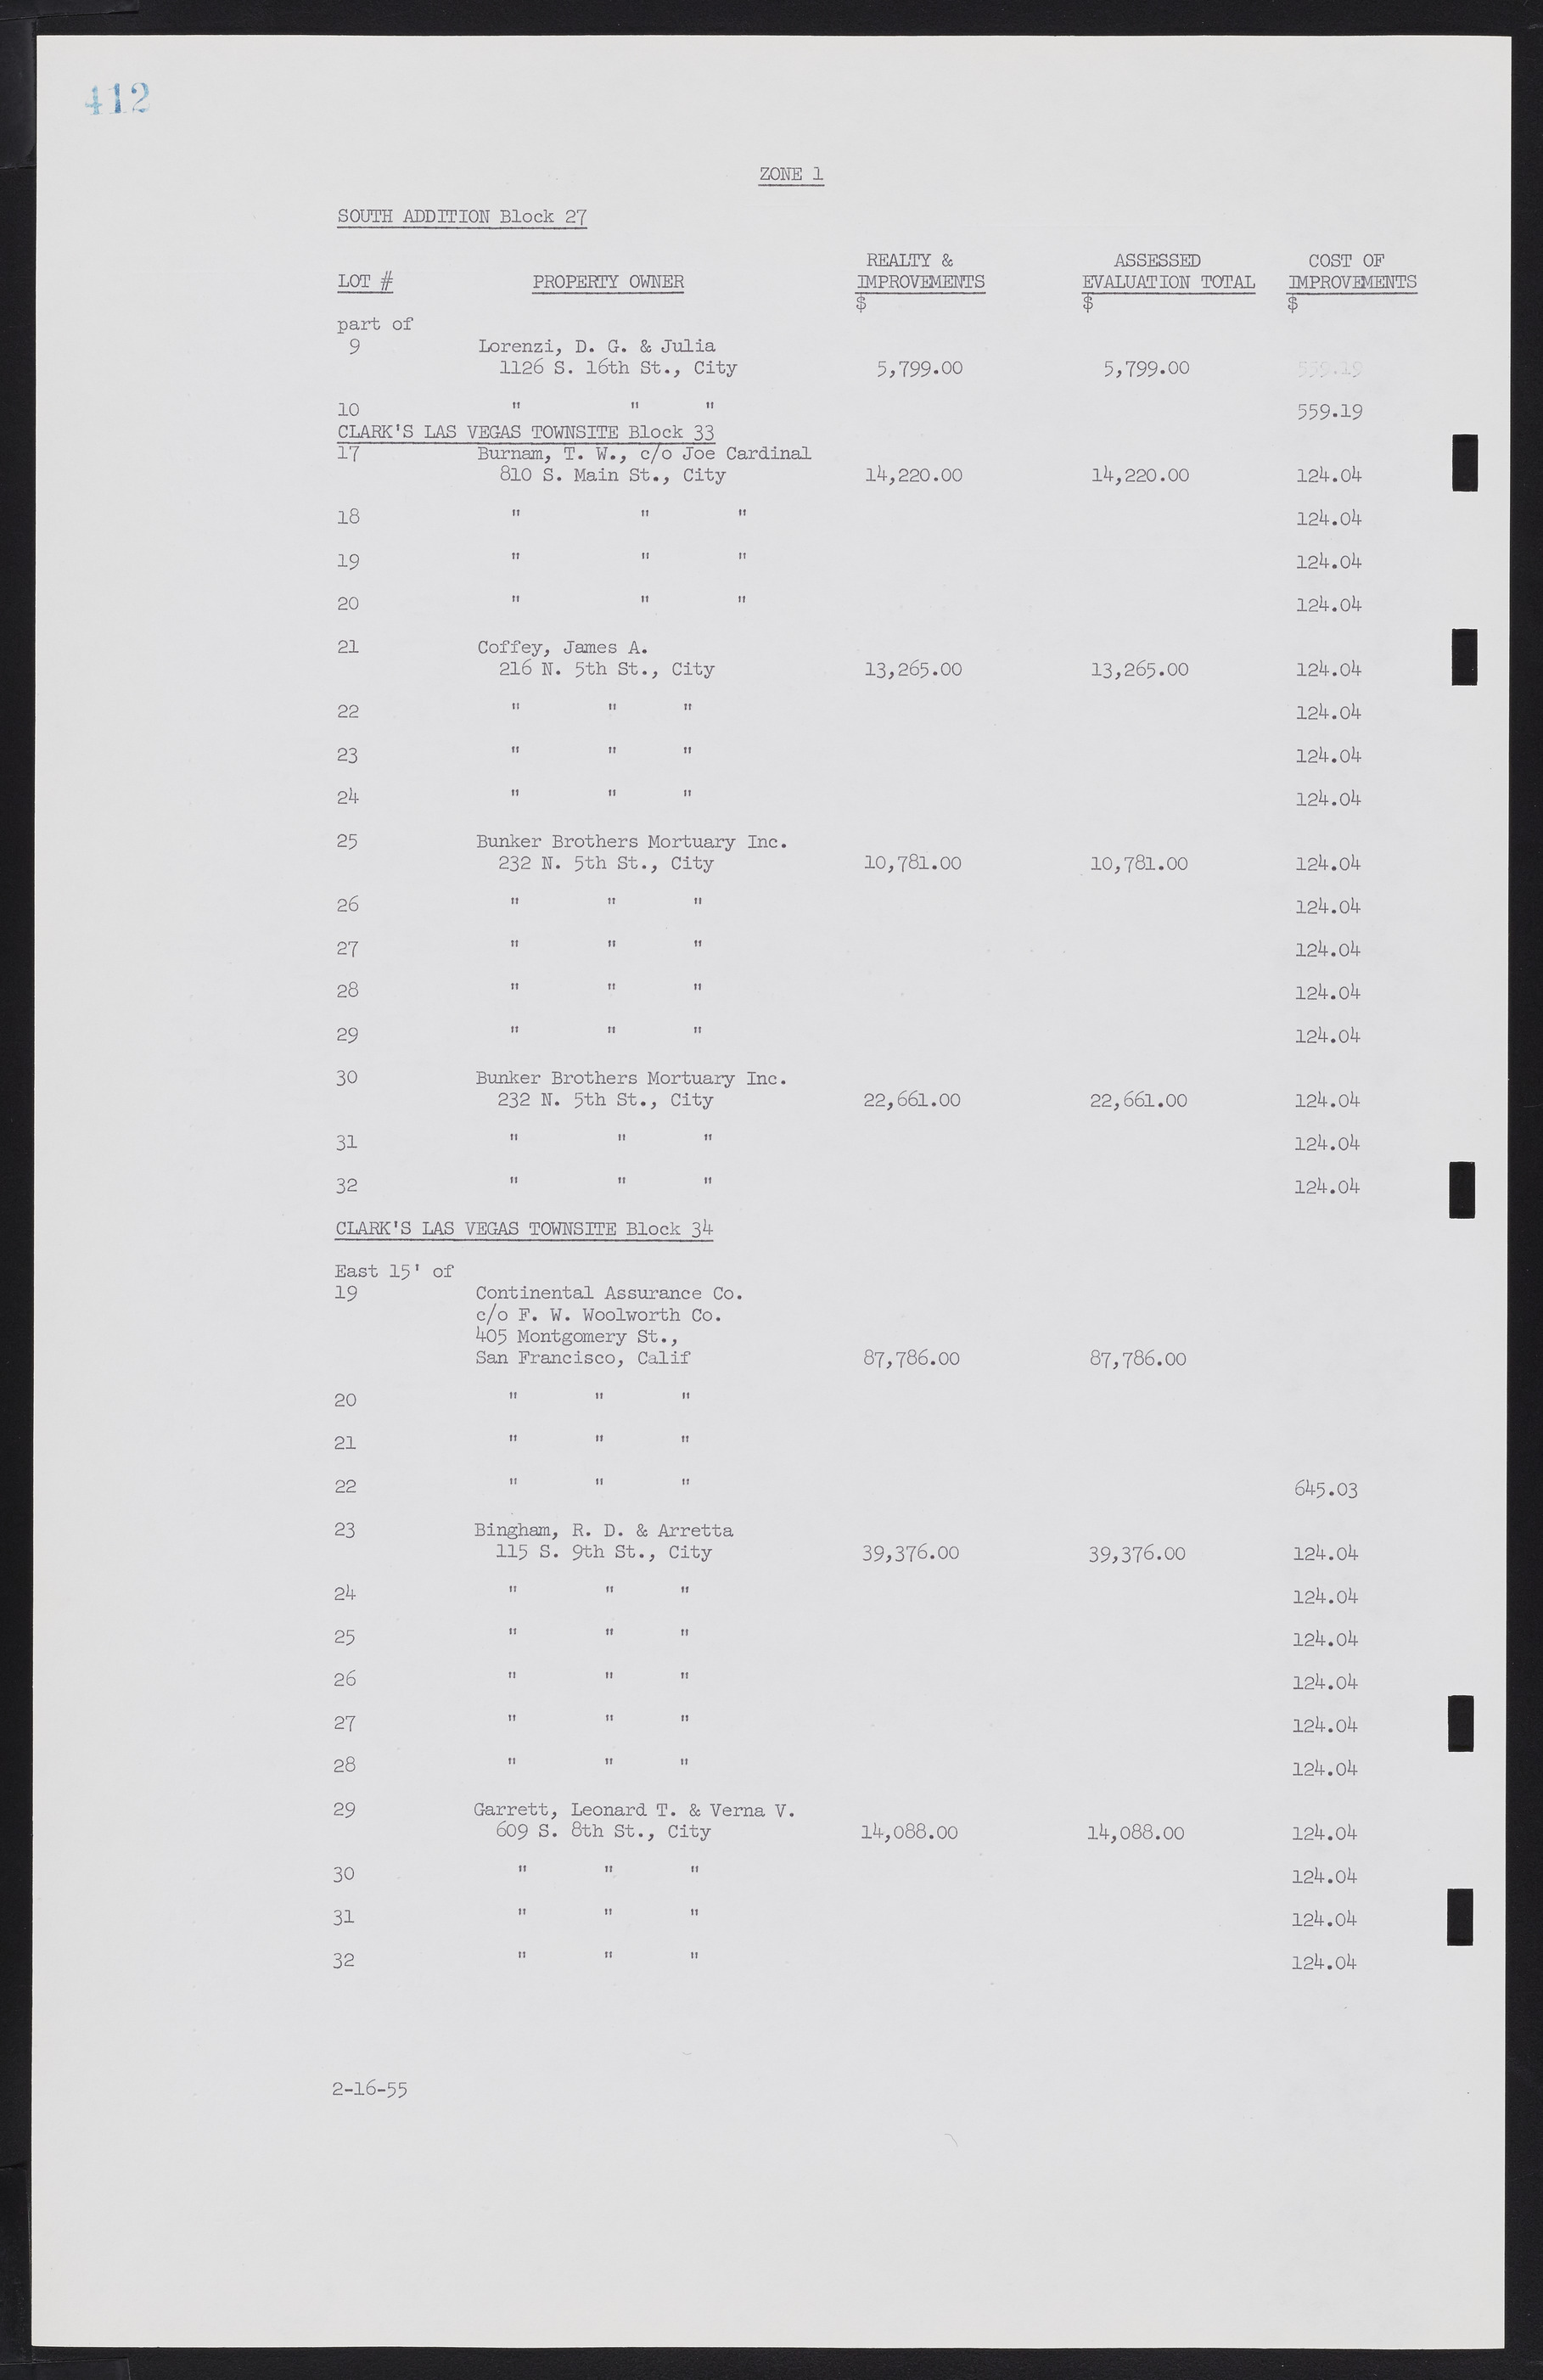 Las Vegas City Commission Minutes, February 17, 1954 to September 21, 1955, lvc000009-418